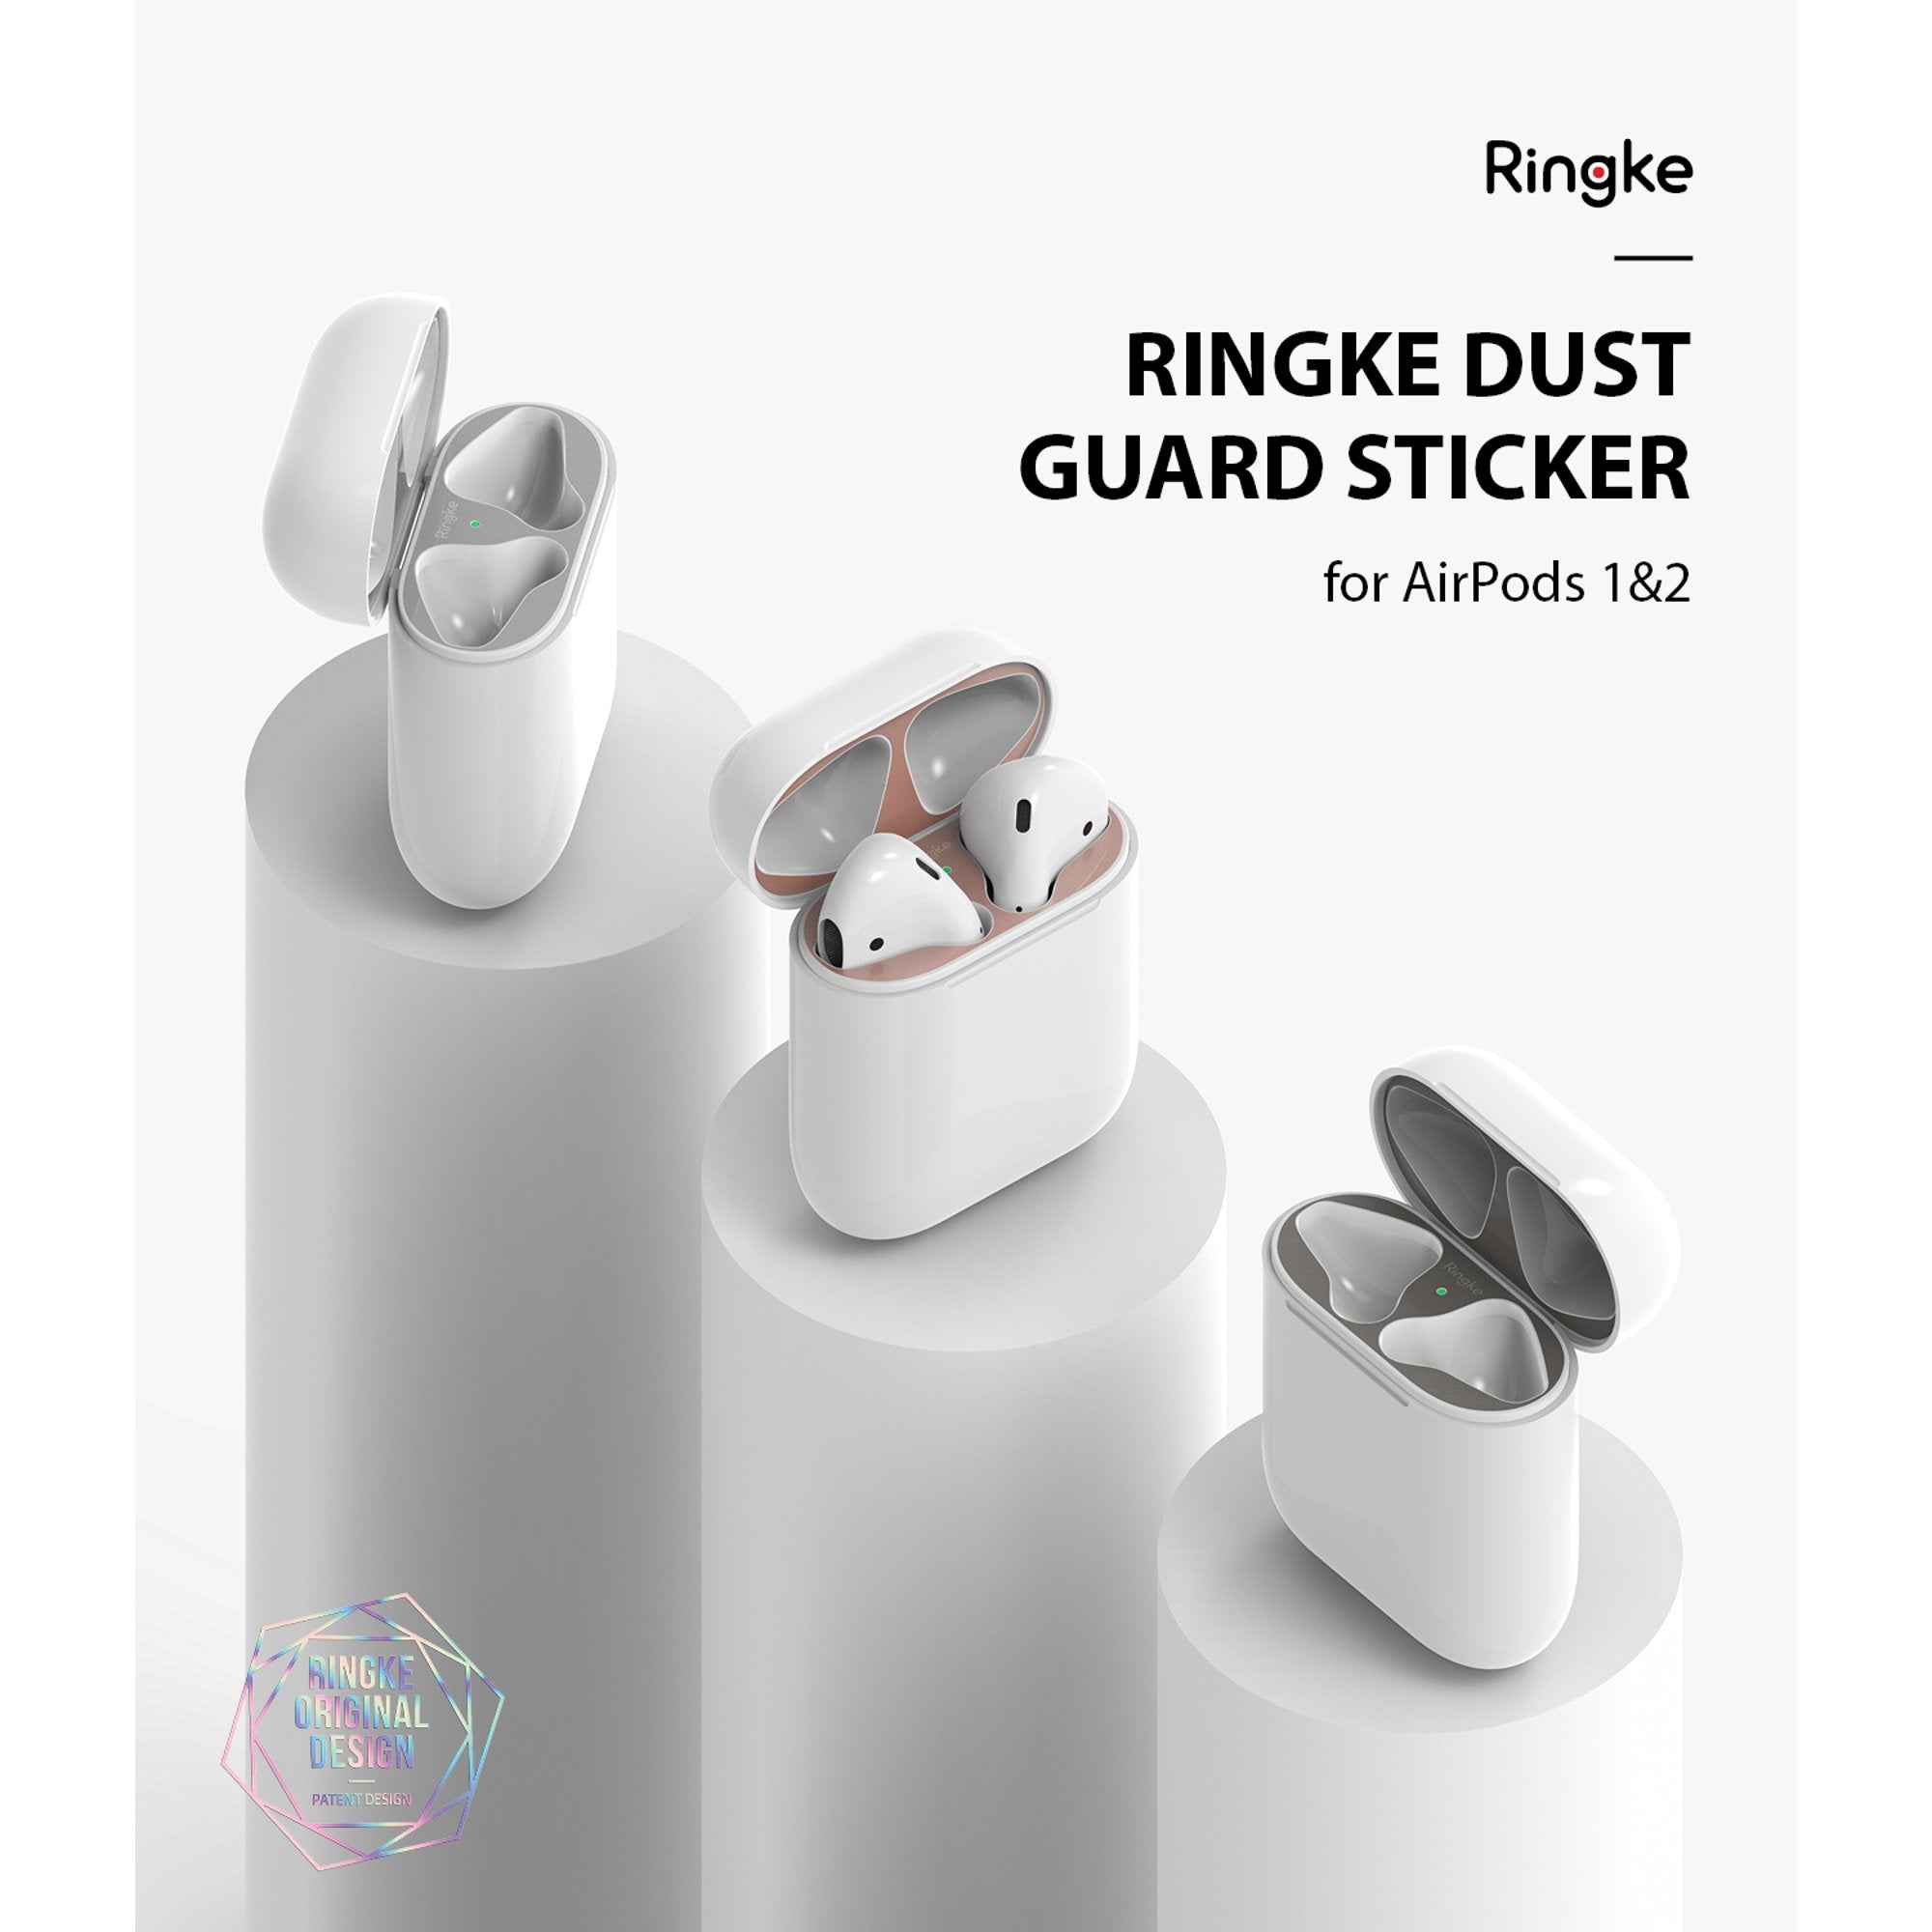 Ringke Airpods 2 / 1 Dust Guard Sticker